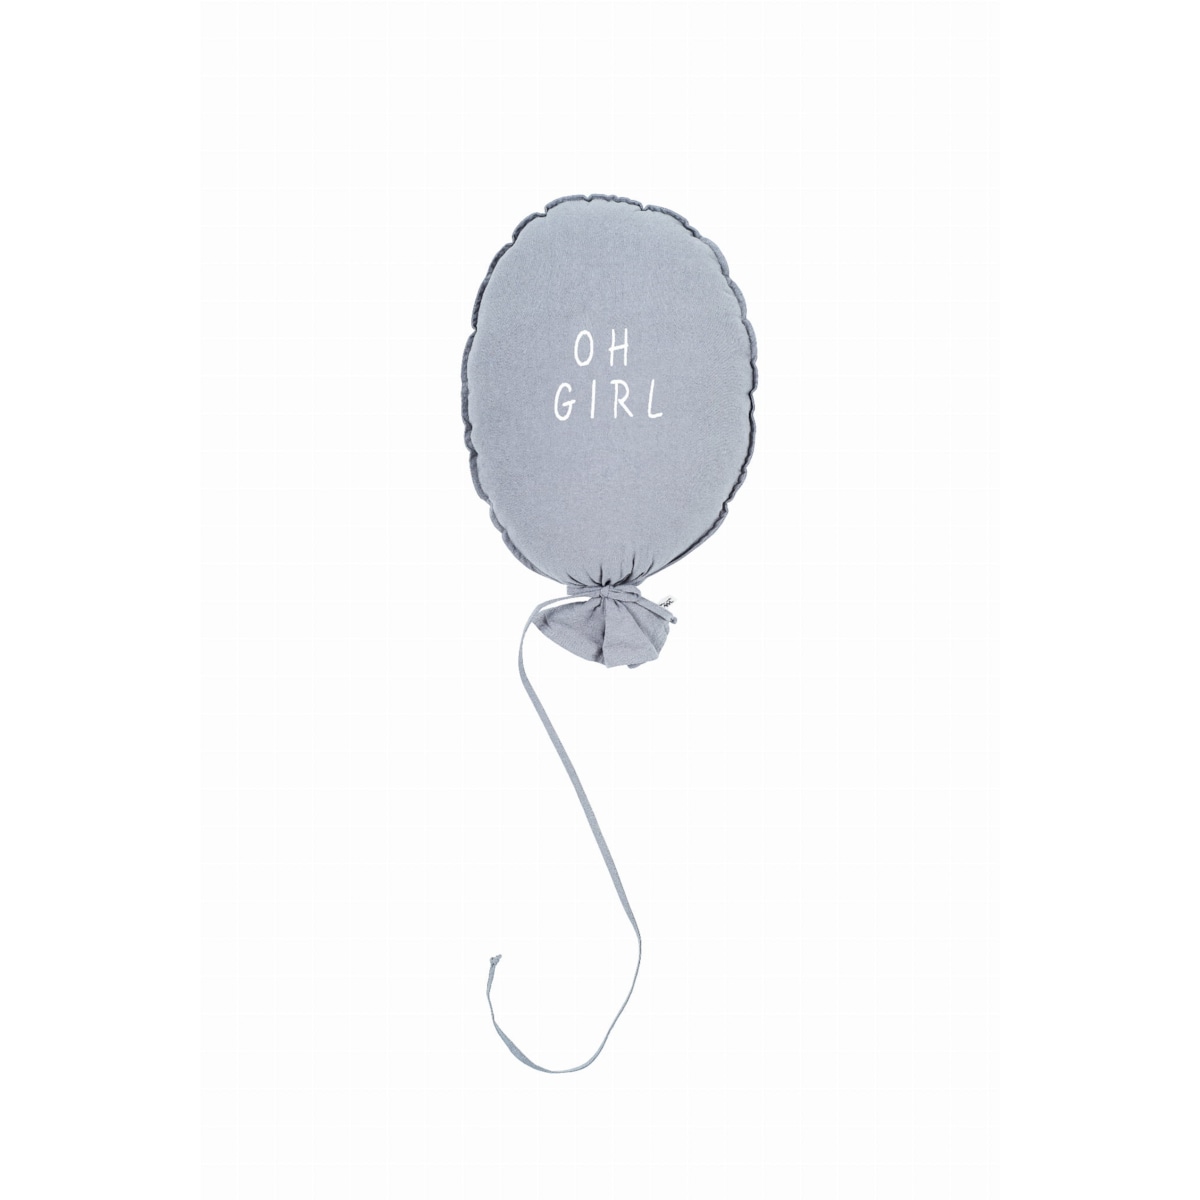 Balon dekoracyjny light grey - OH GIRL, ECRU